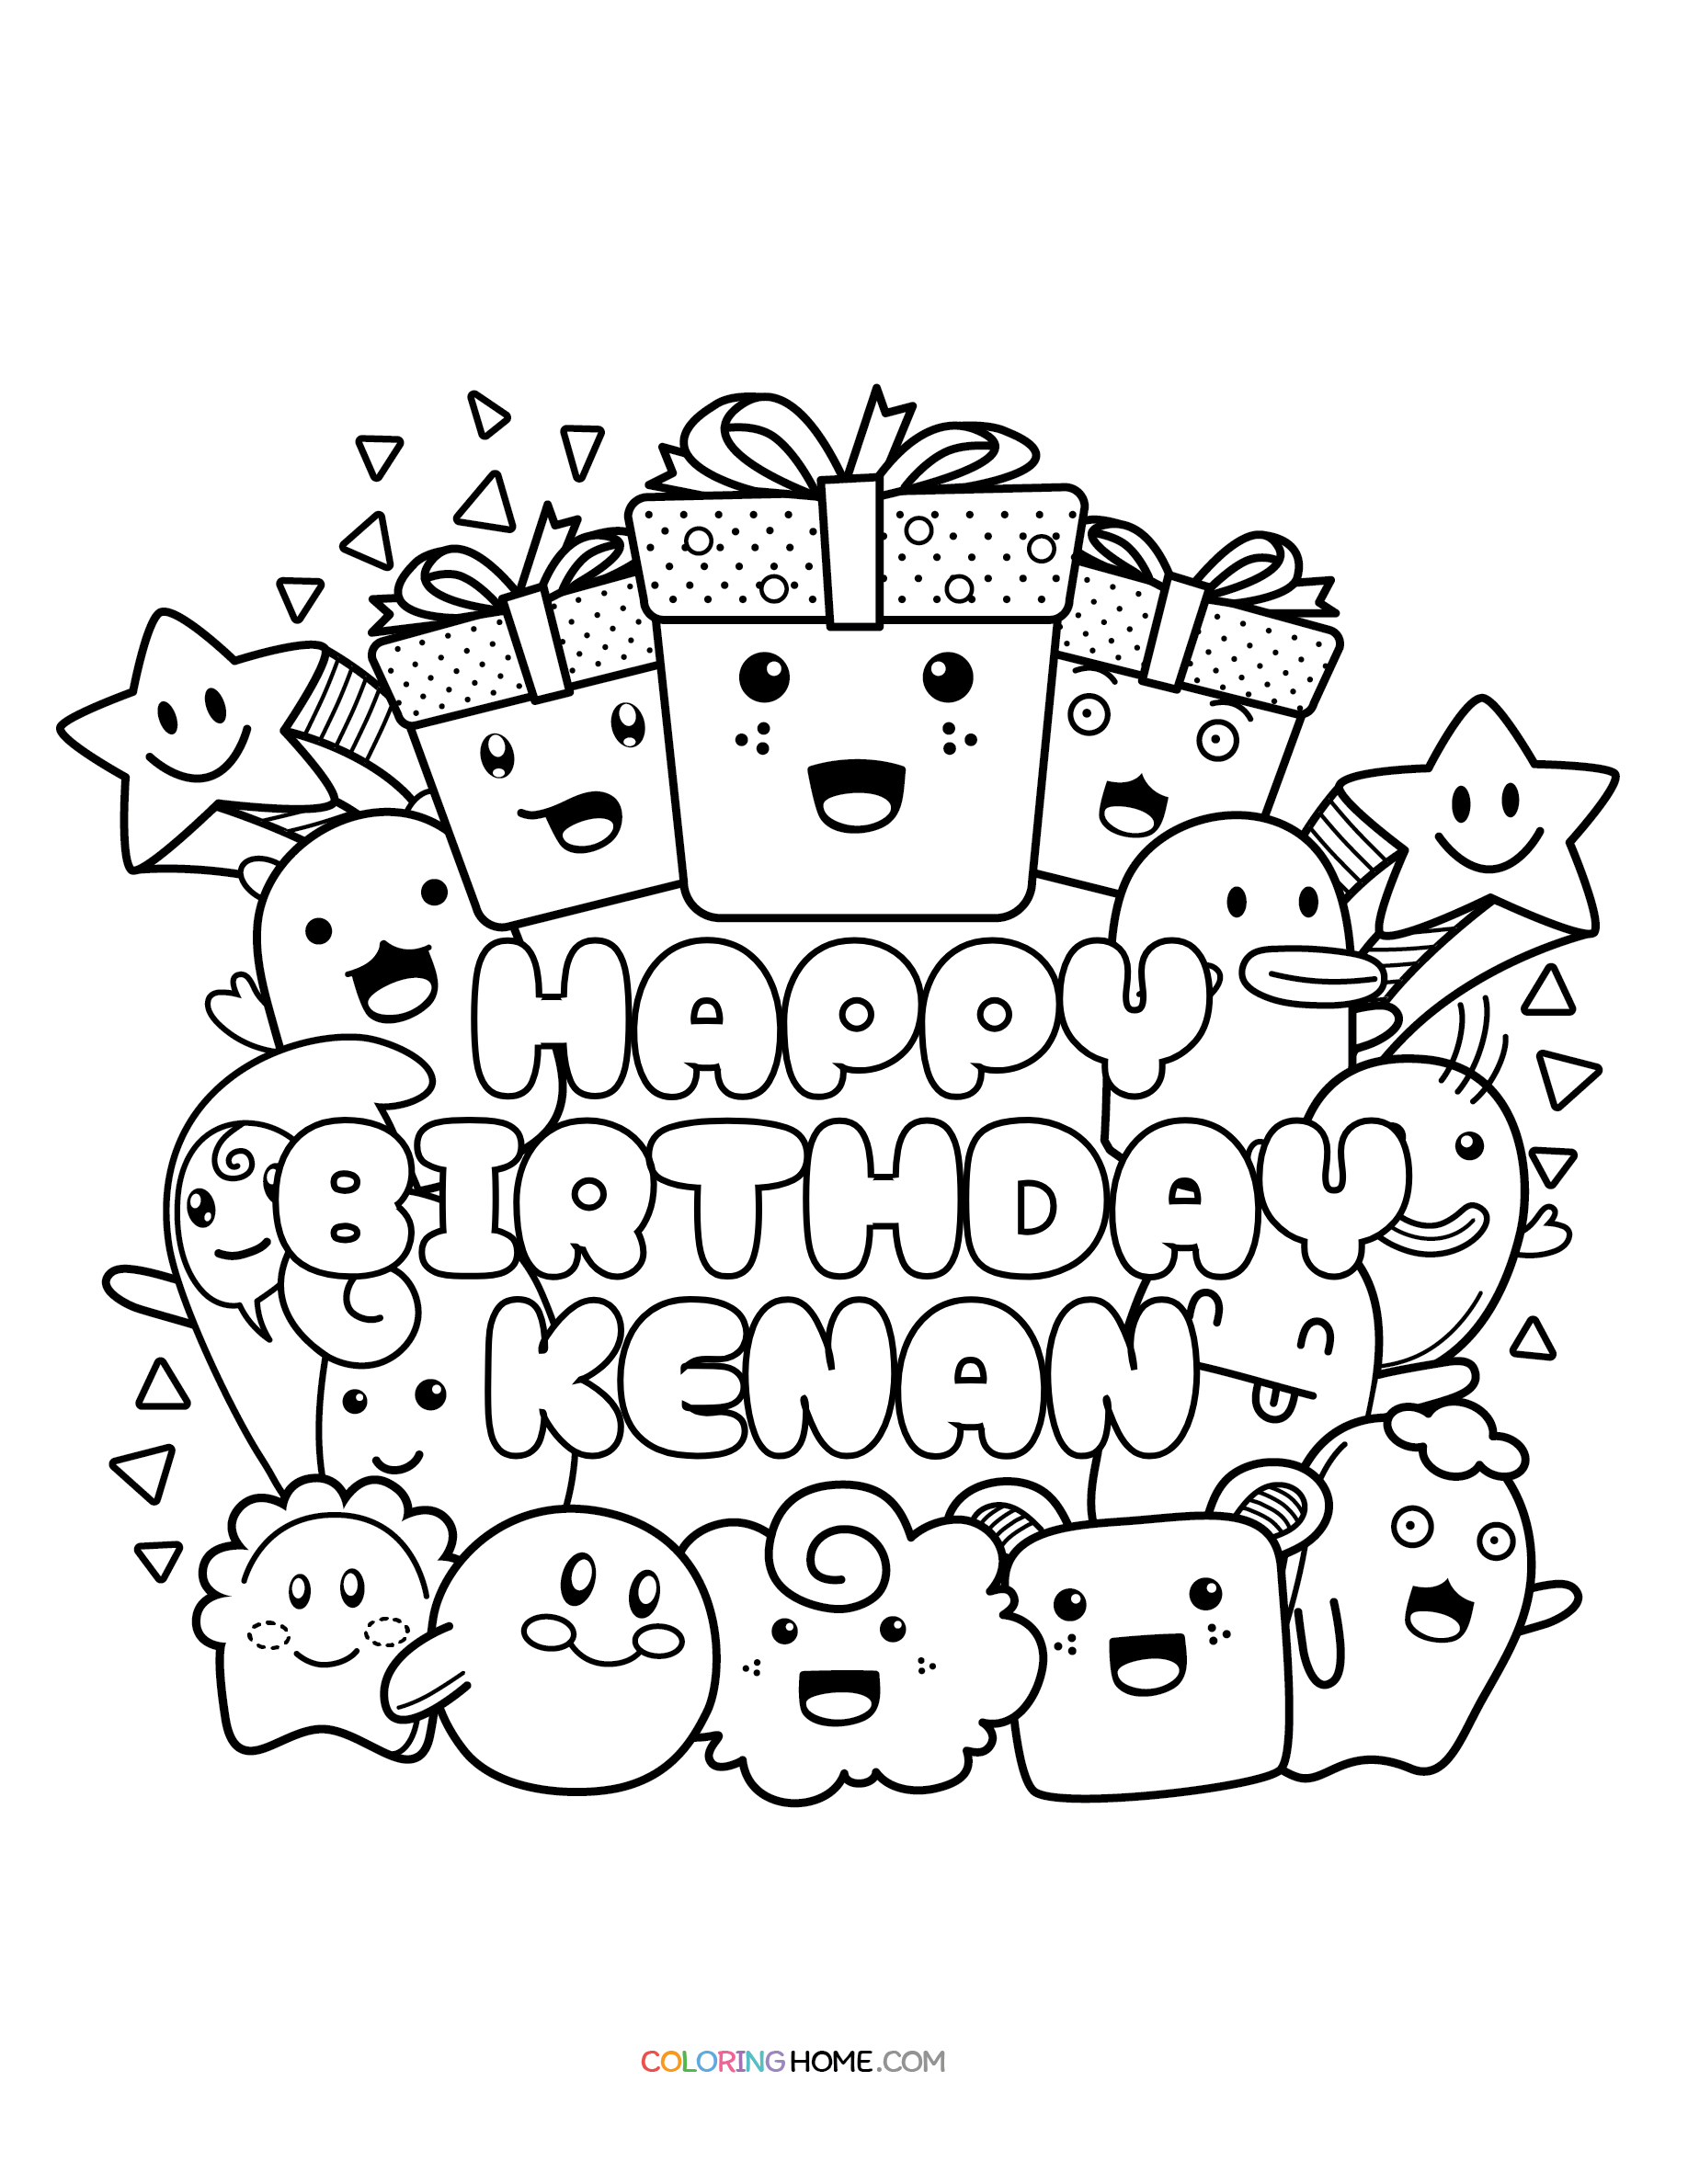 Happy Birthday Kenan coloring page